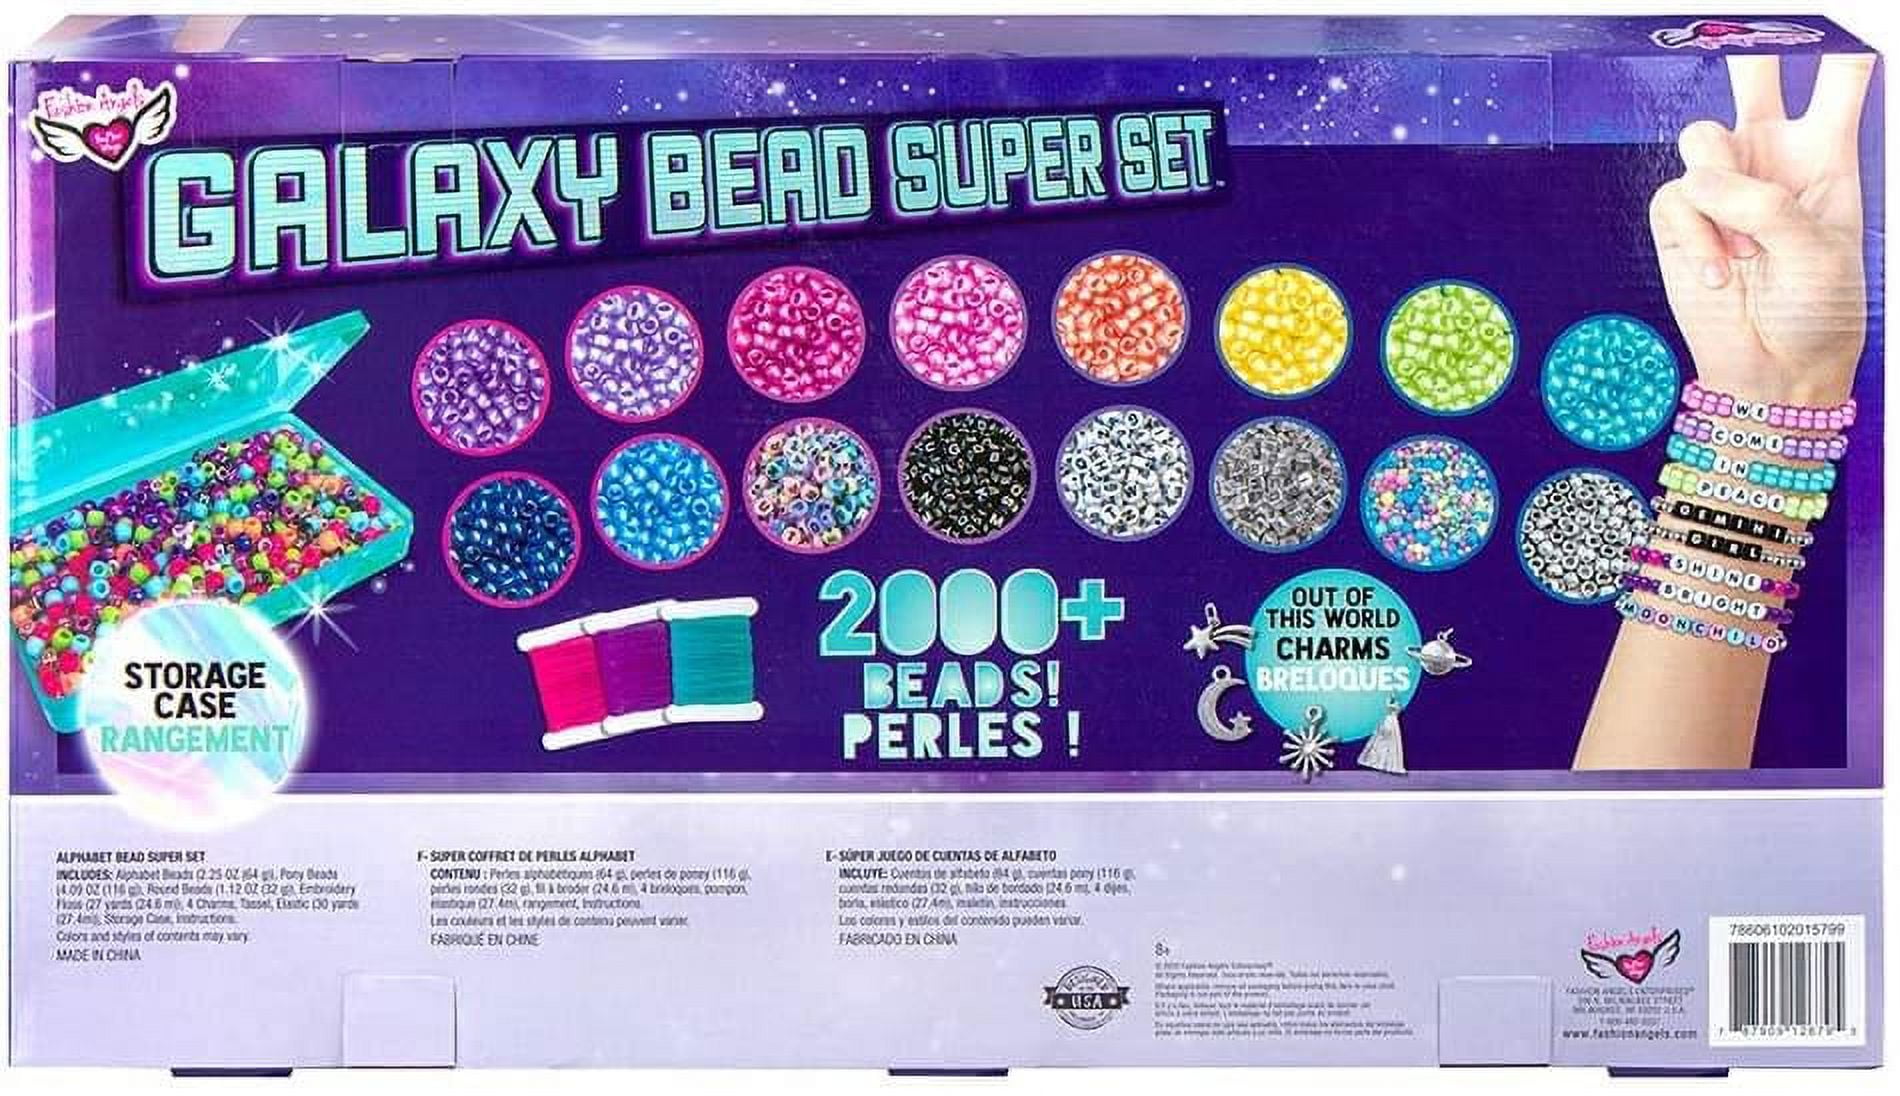 Fashion Angels Galaxy Bead Super Set, 2,000+ Bead Bracelet Making kit -  Makes 50+ Bracelets, Alphabet Charms, Pearlescent & Metallic Beads,  Includes